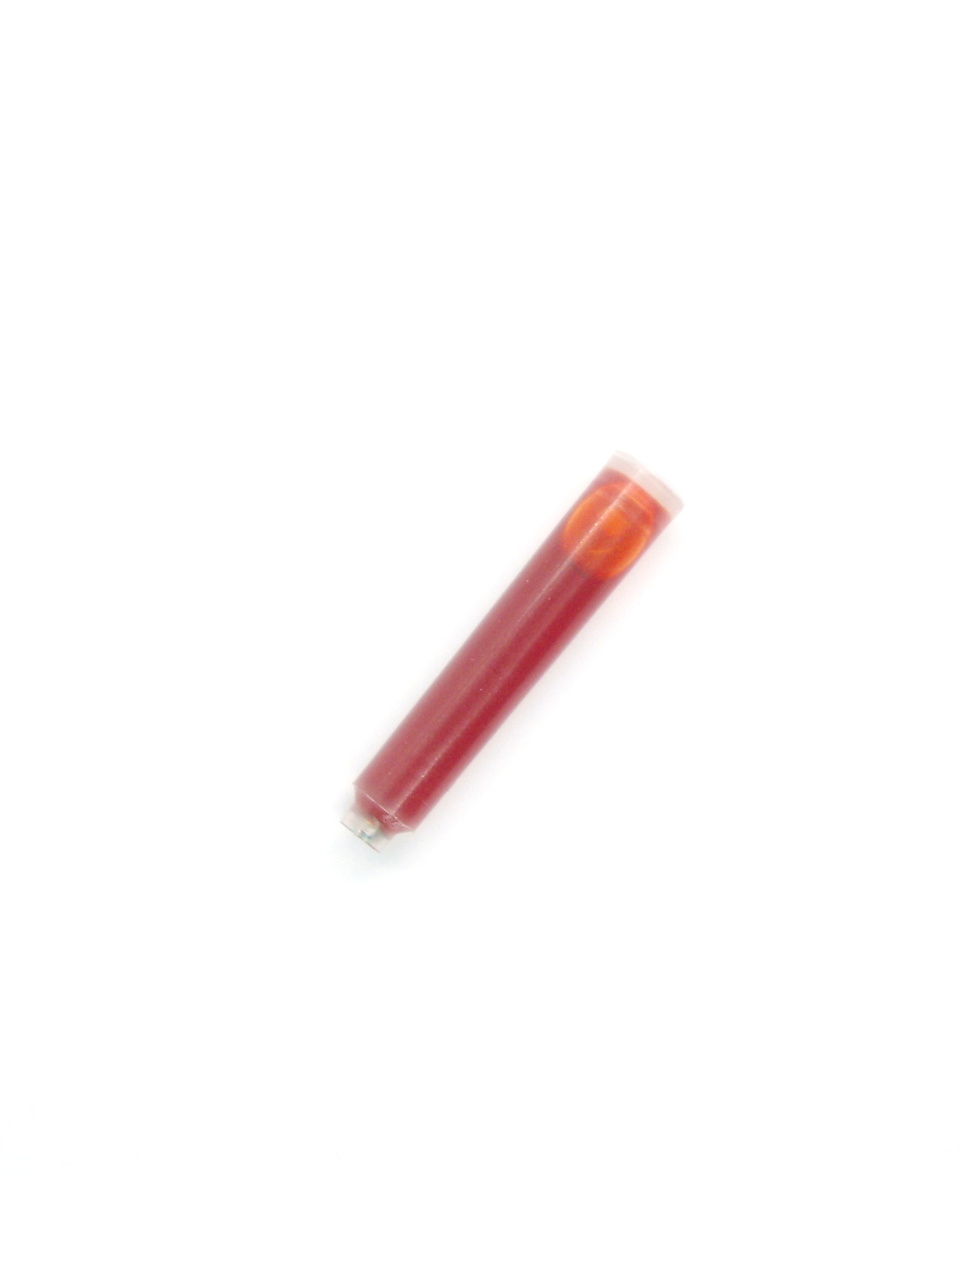 Ink Cartridges For Laban Fountain Pens (Orange)